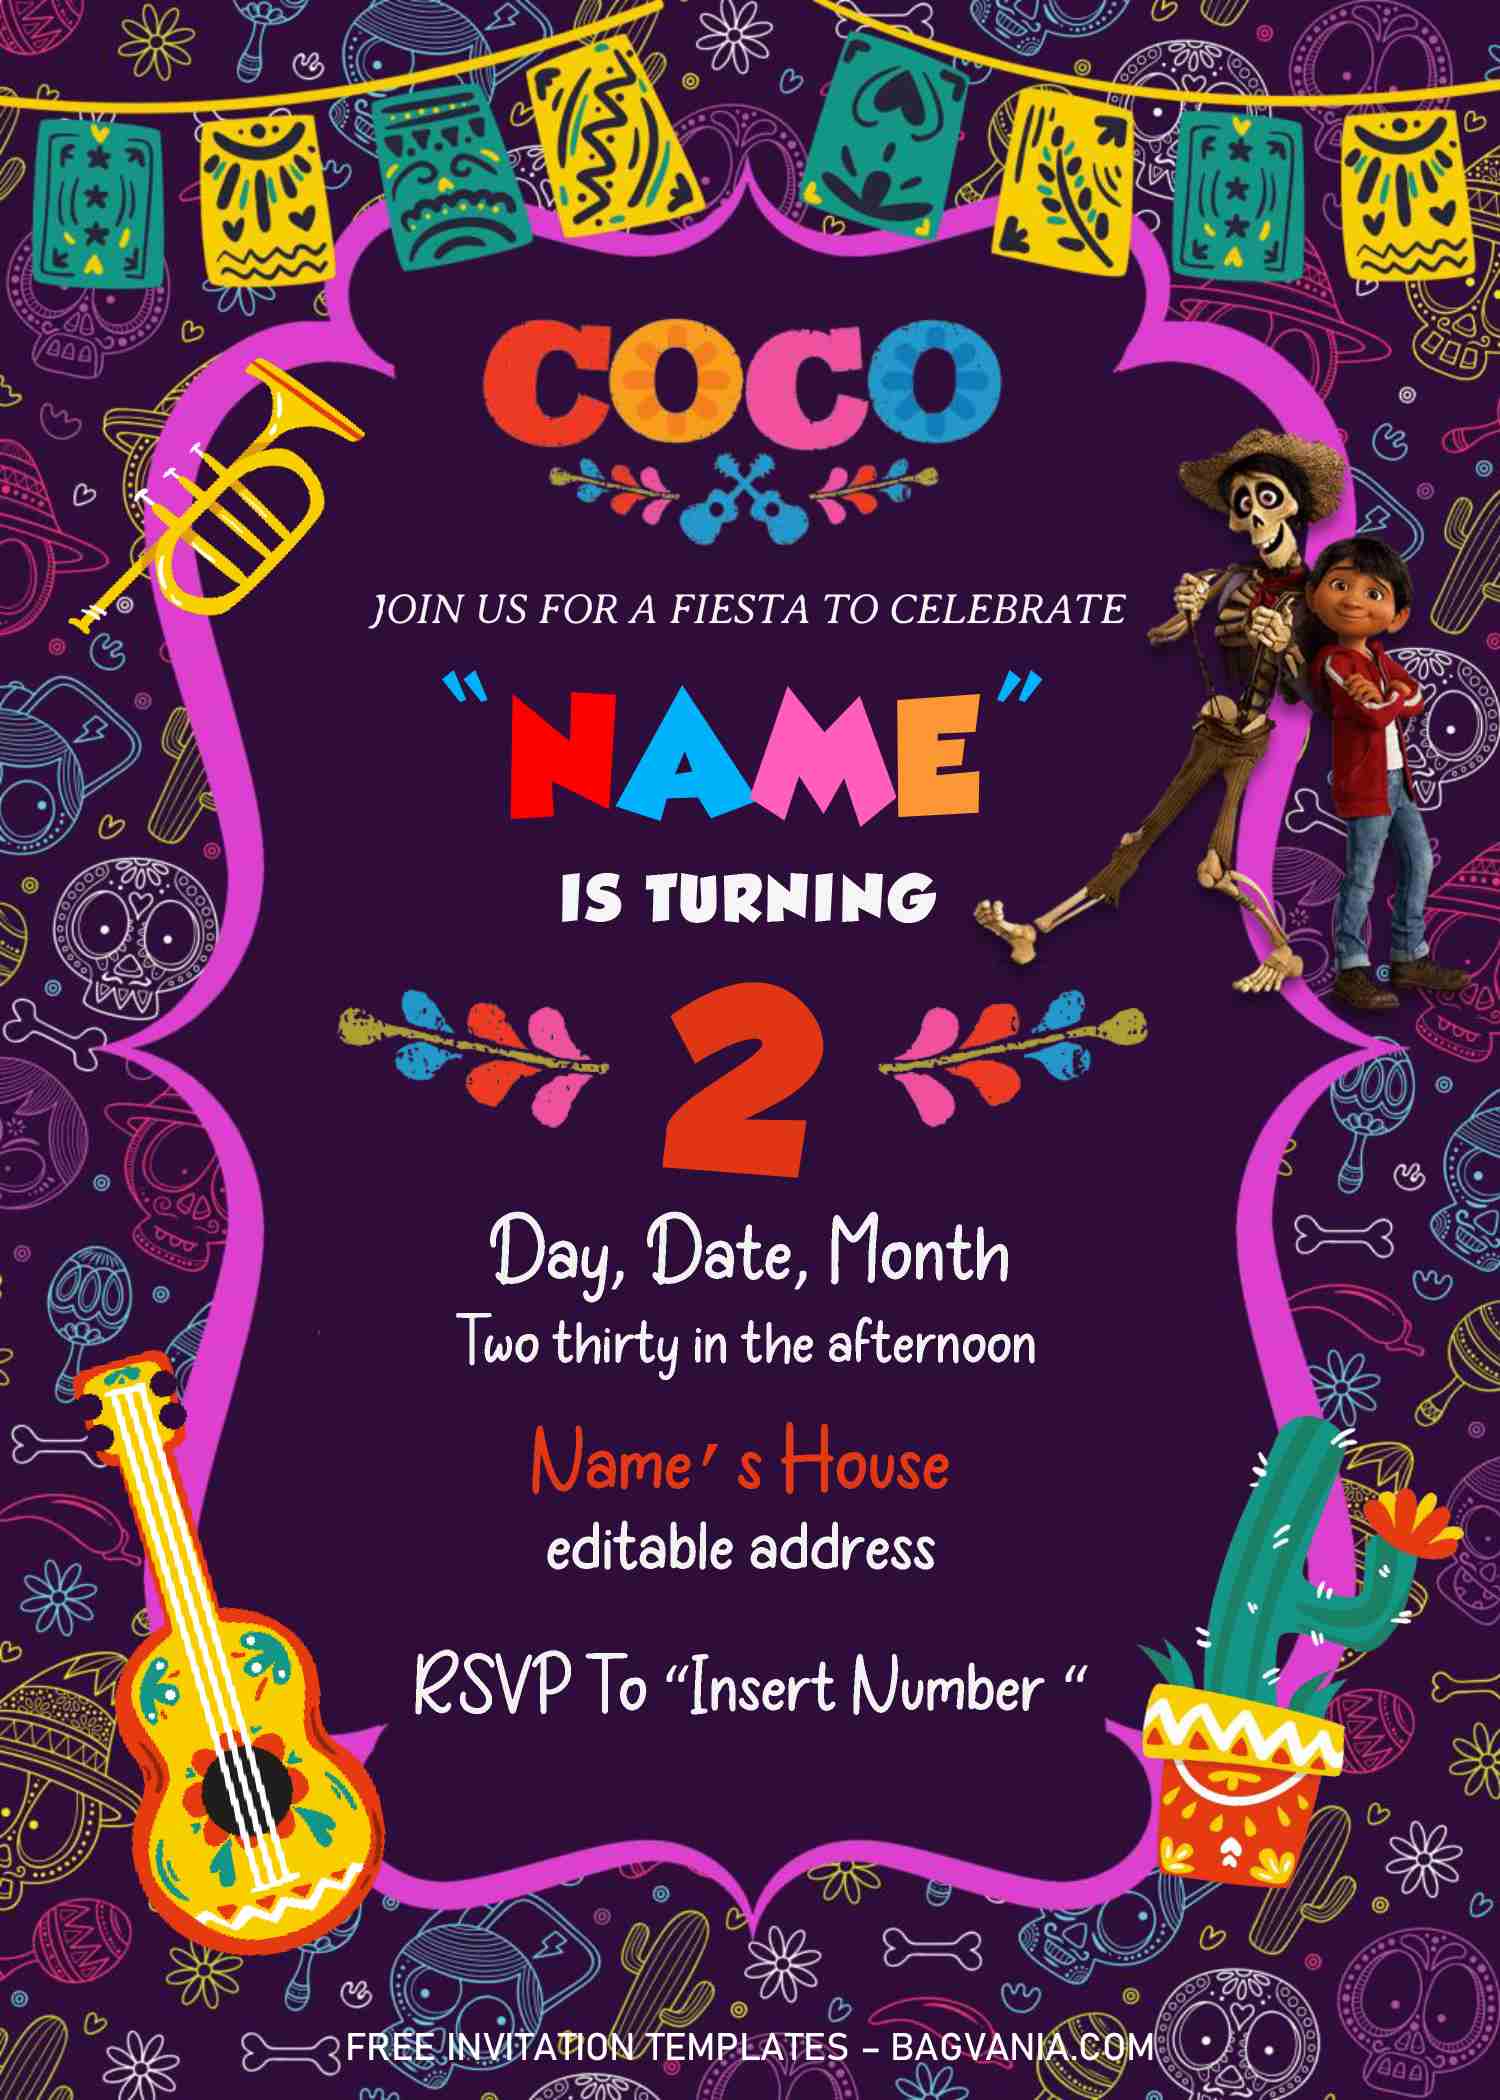 Coco Pixar Birthday Invitation Templates Editable With MS Word FREE Printable Birthday